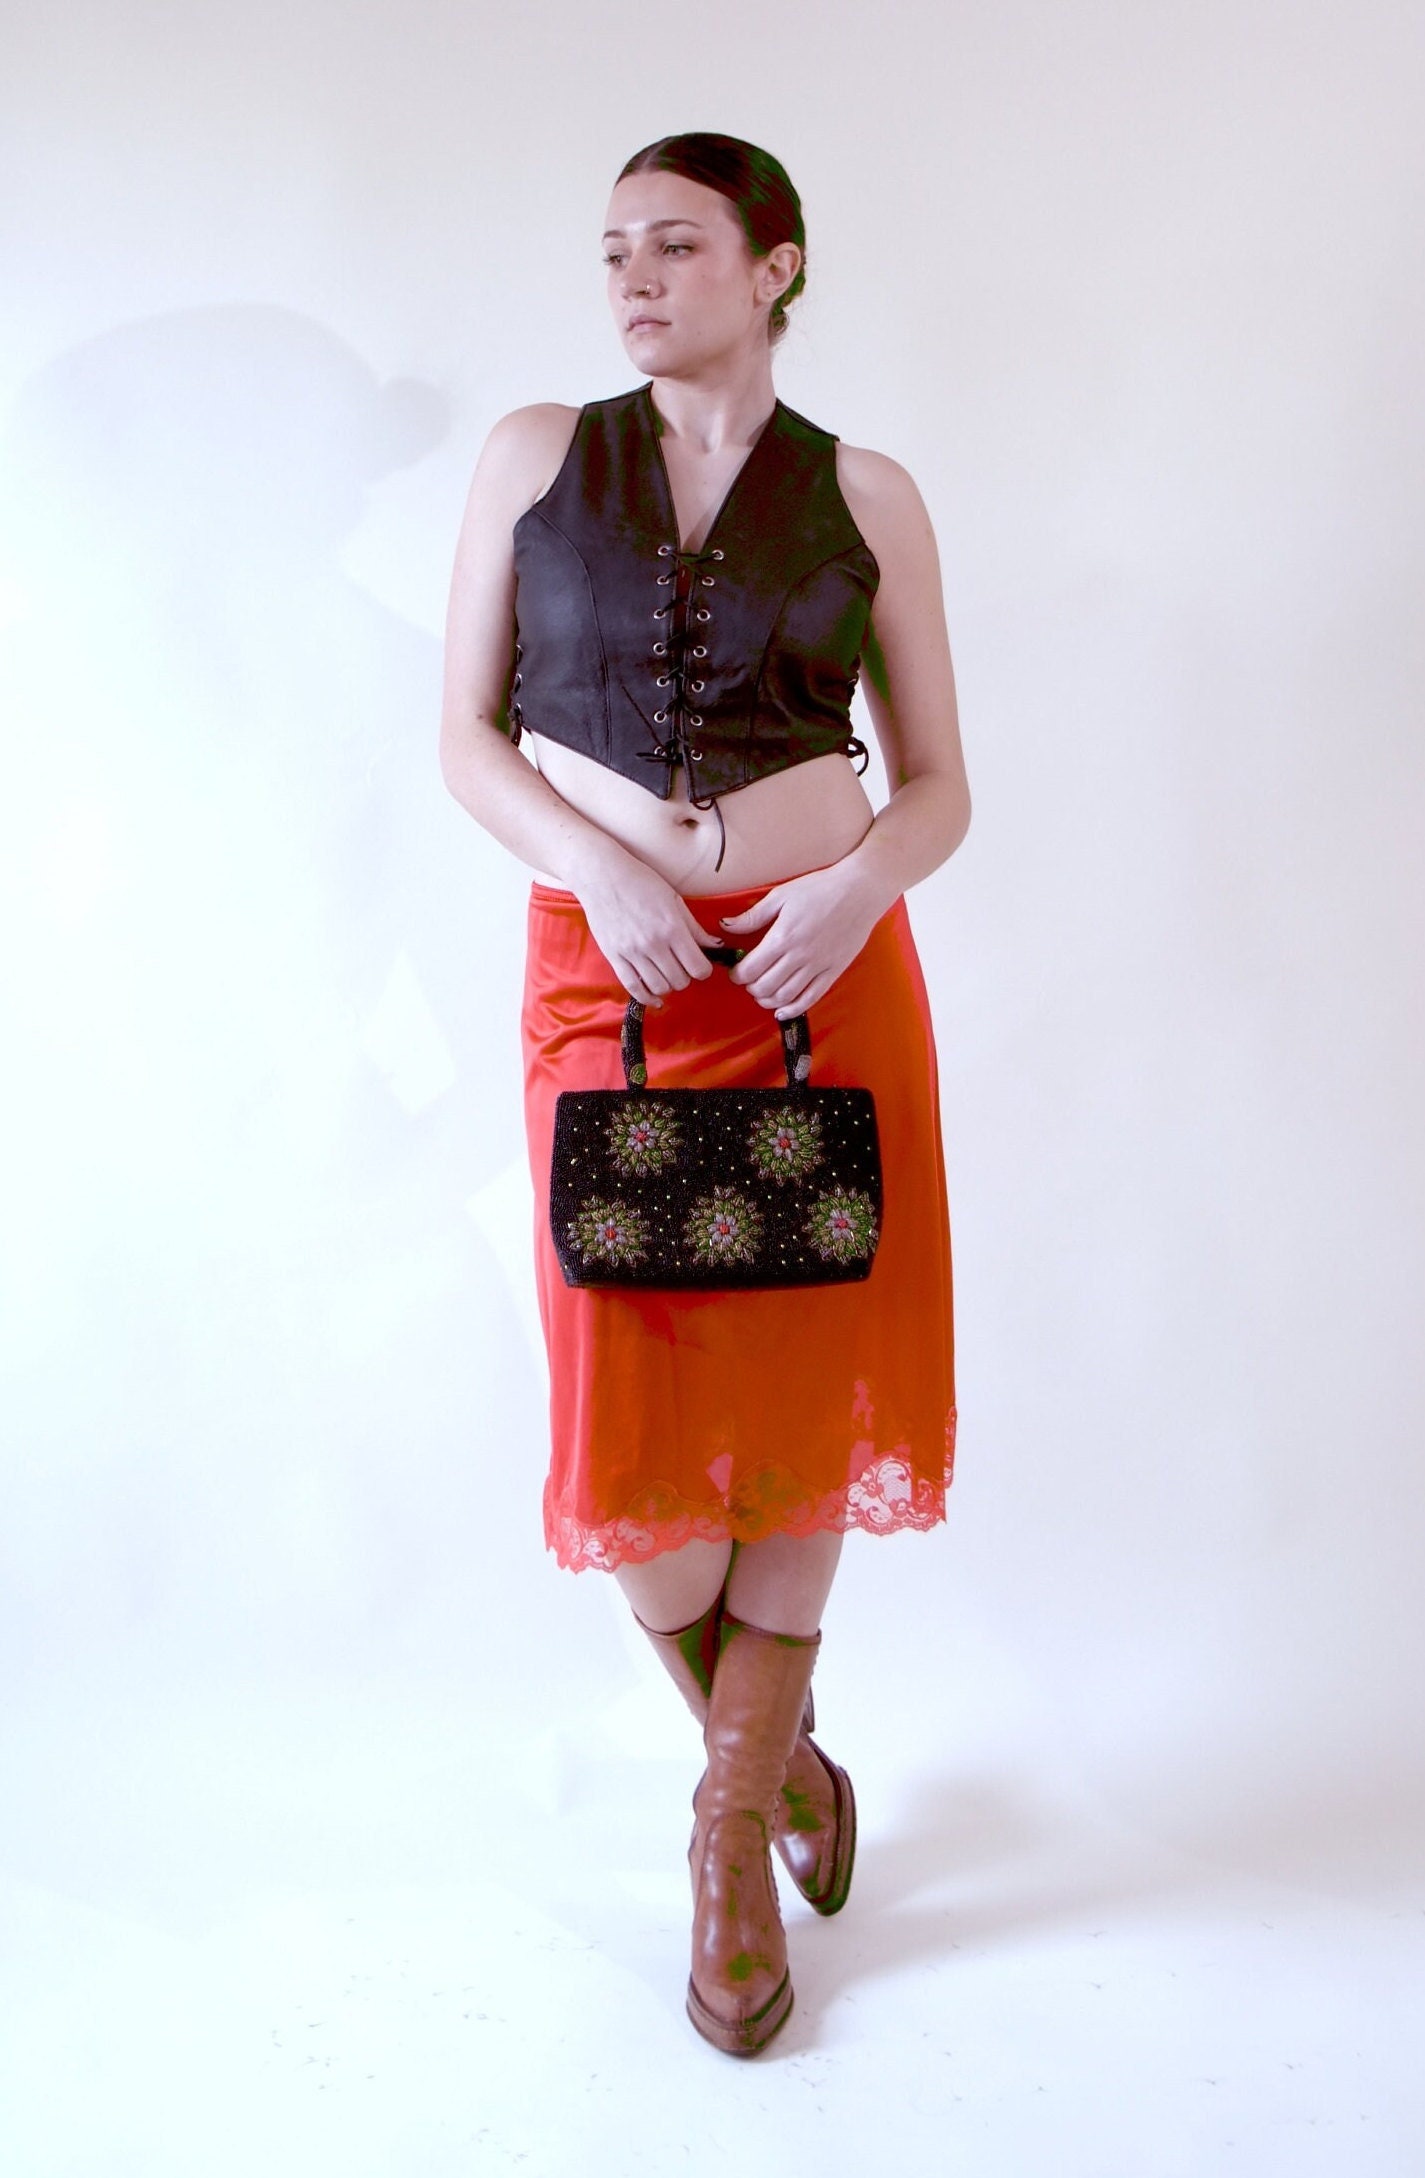 Luxury Bag,Handbag Genuine Leather Women High Quality Baguette Black  Leather Bag – YesFashionLuxe